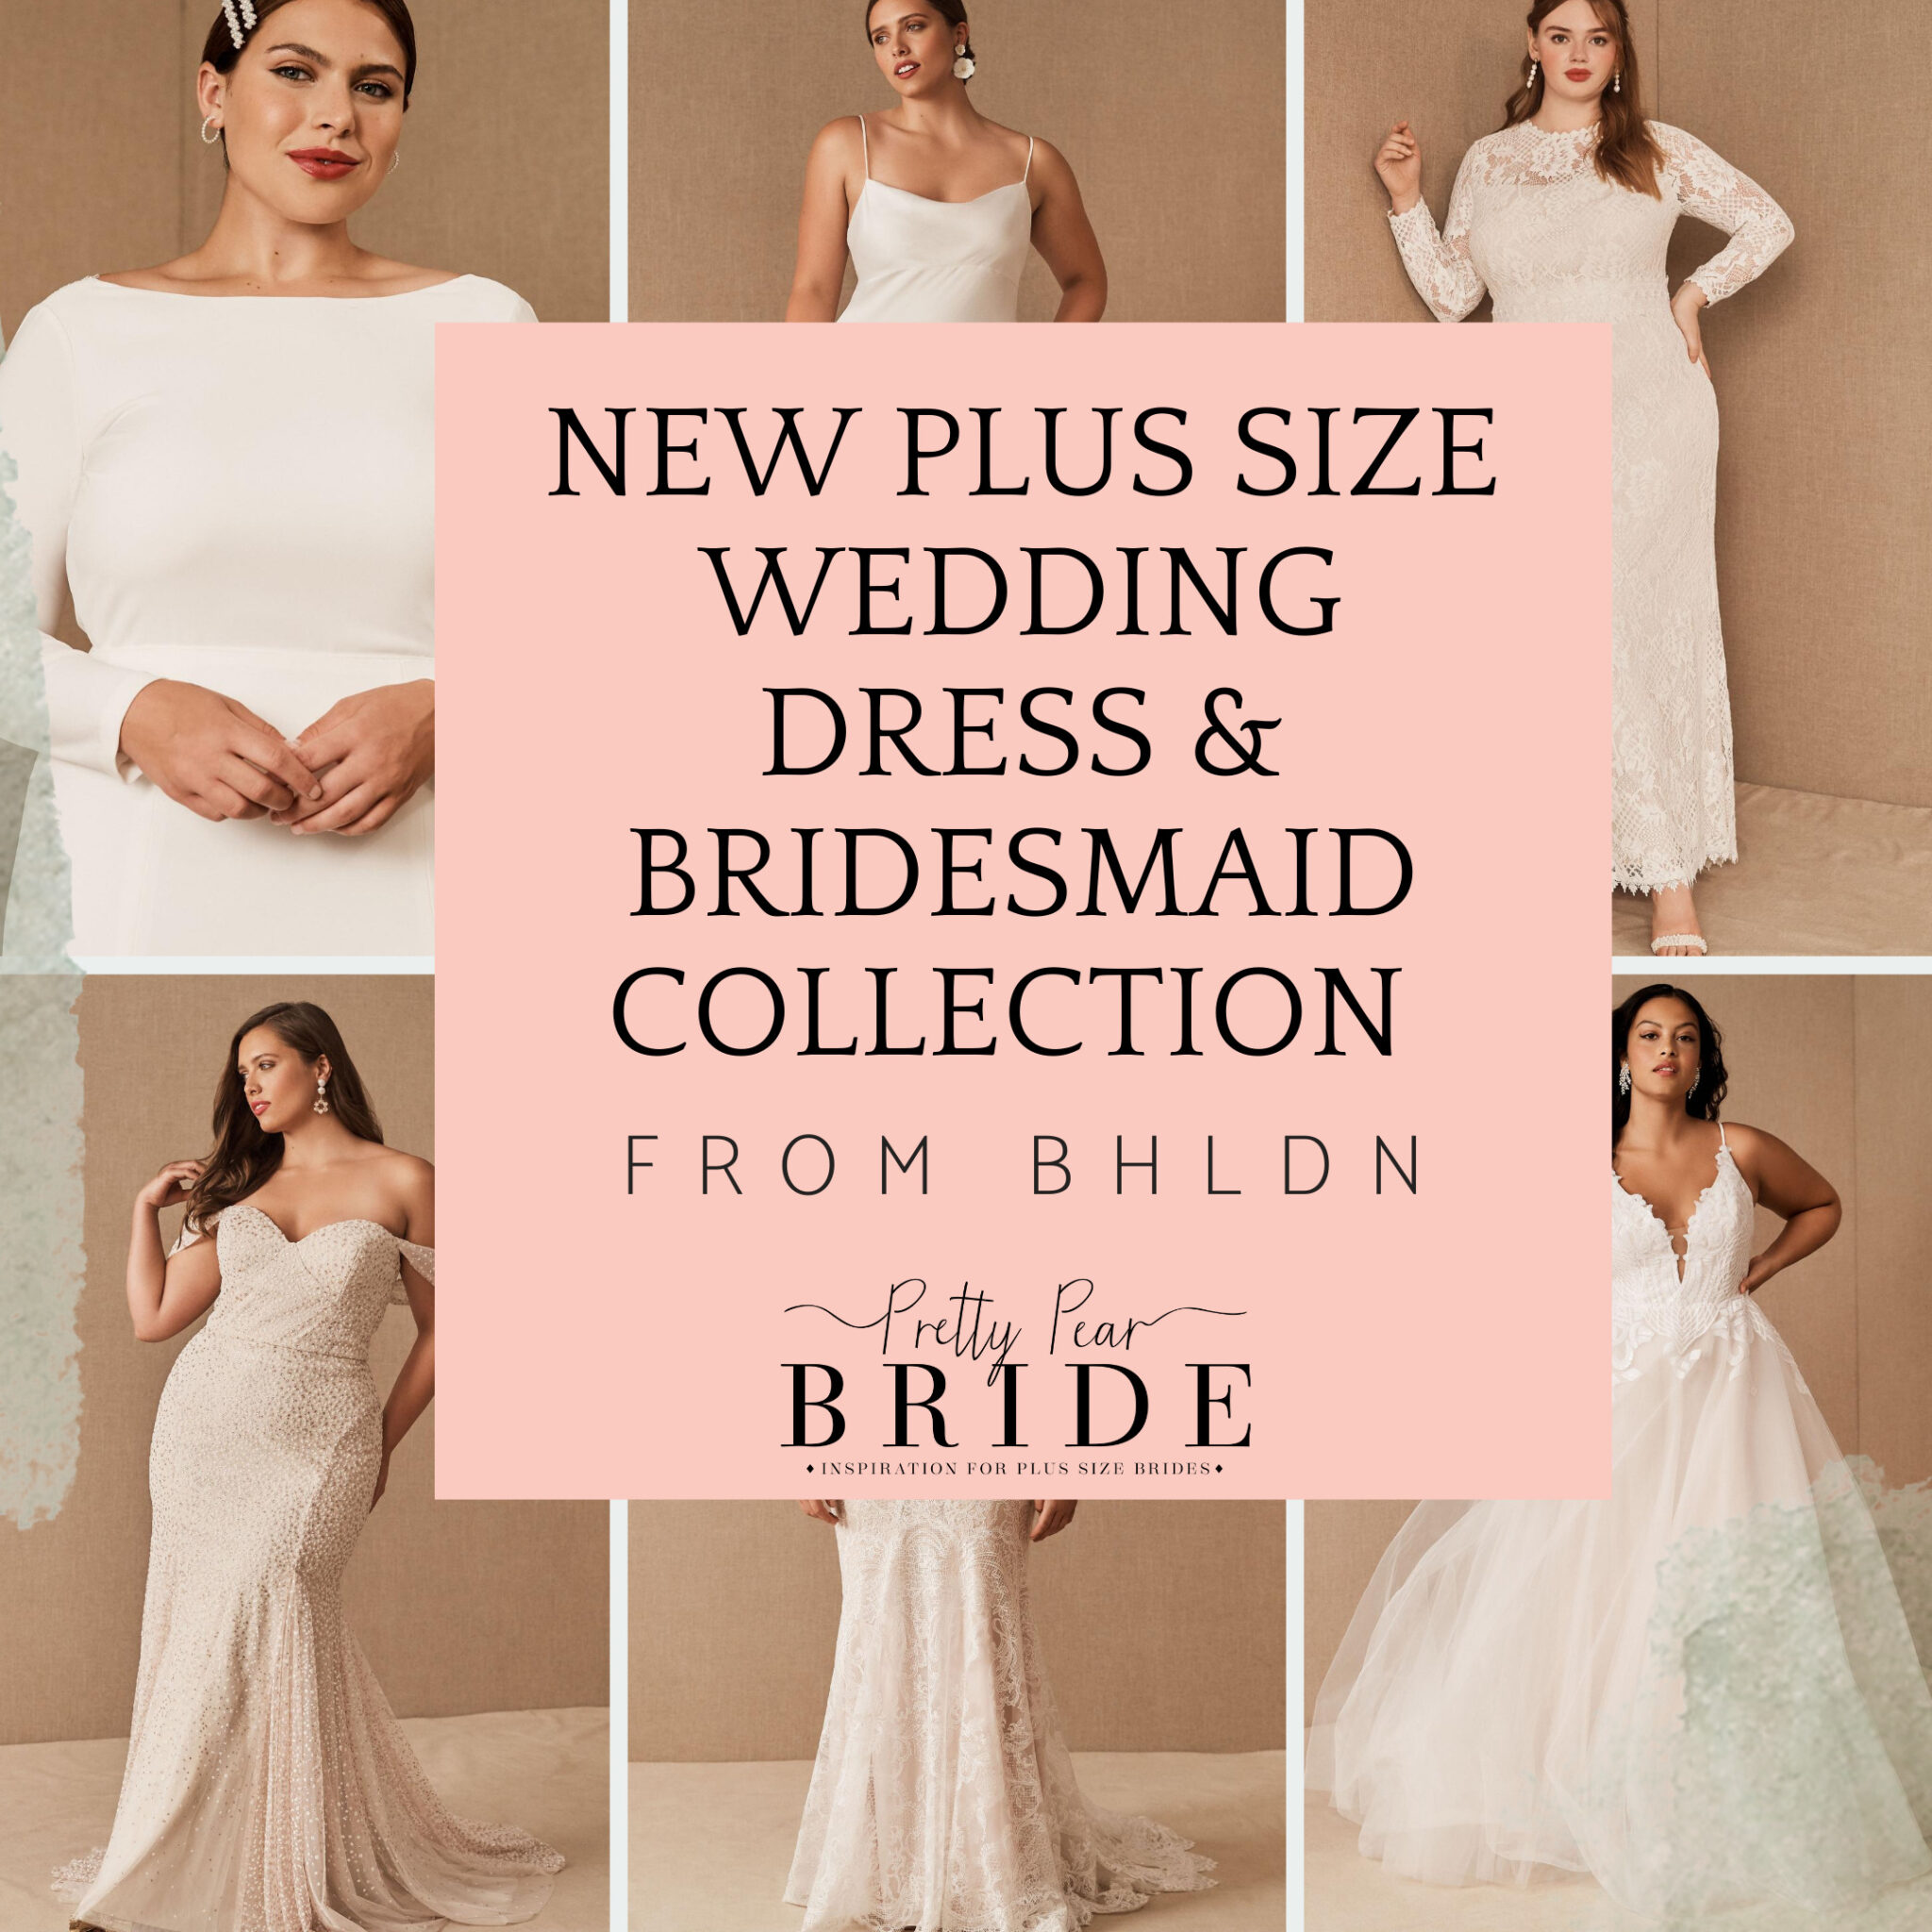 Plus Size Fashion Archives - The Pretty Pear Bride - Plus Size Bridal ...